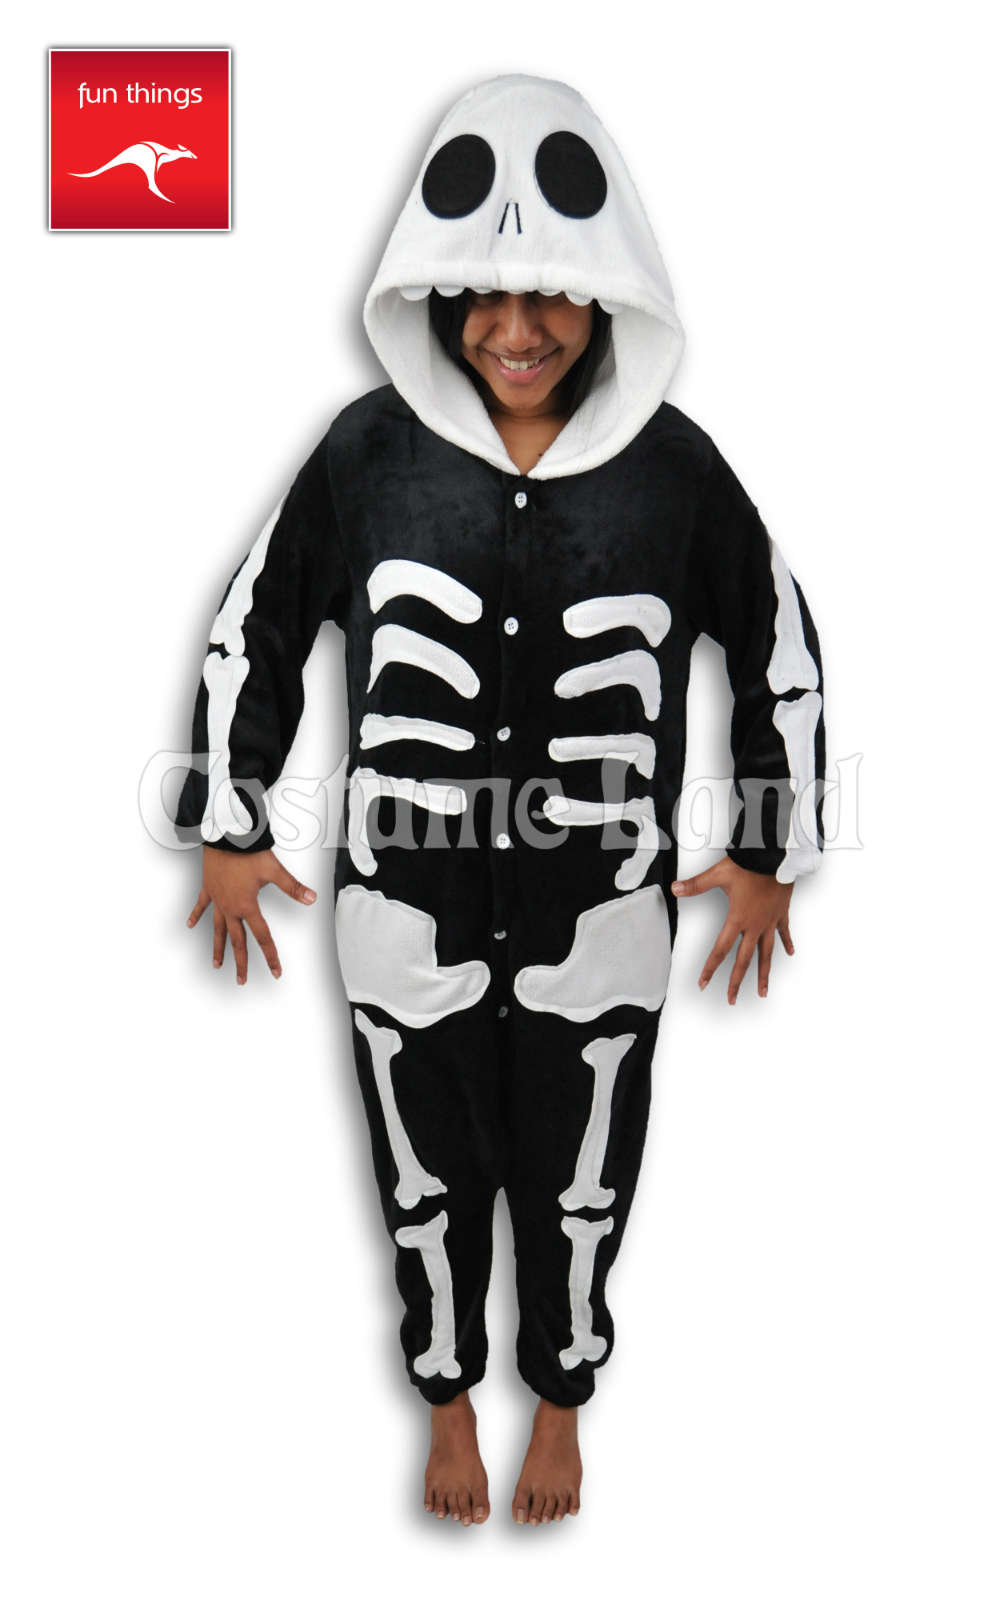 Skeleton Onesie - Costume Land